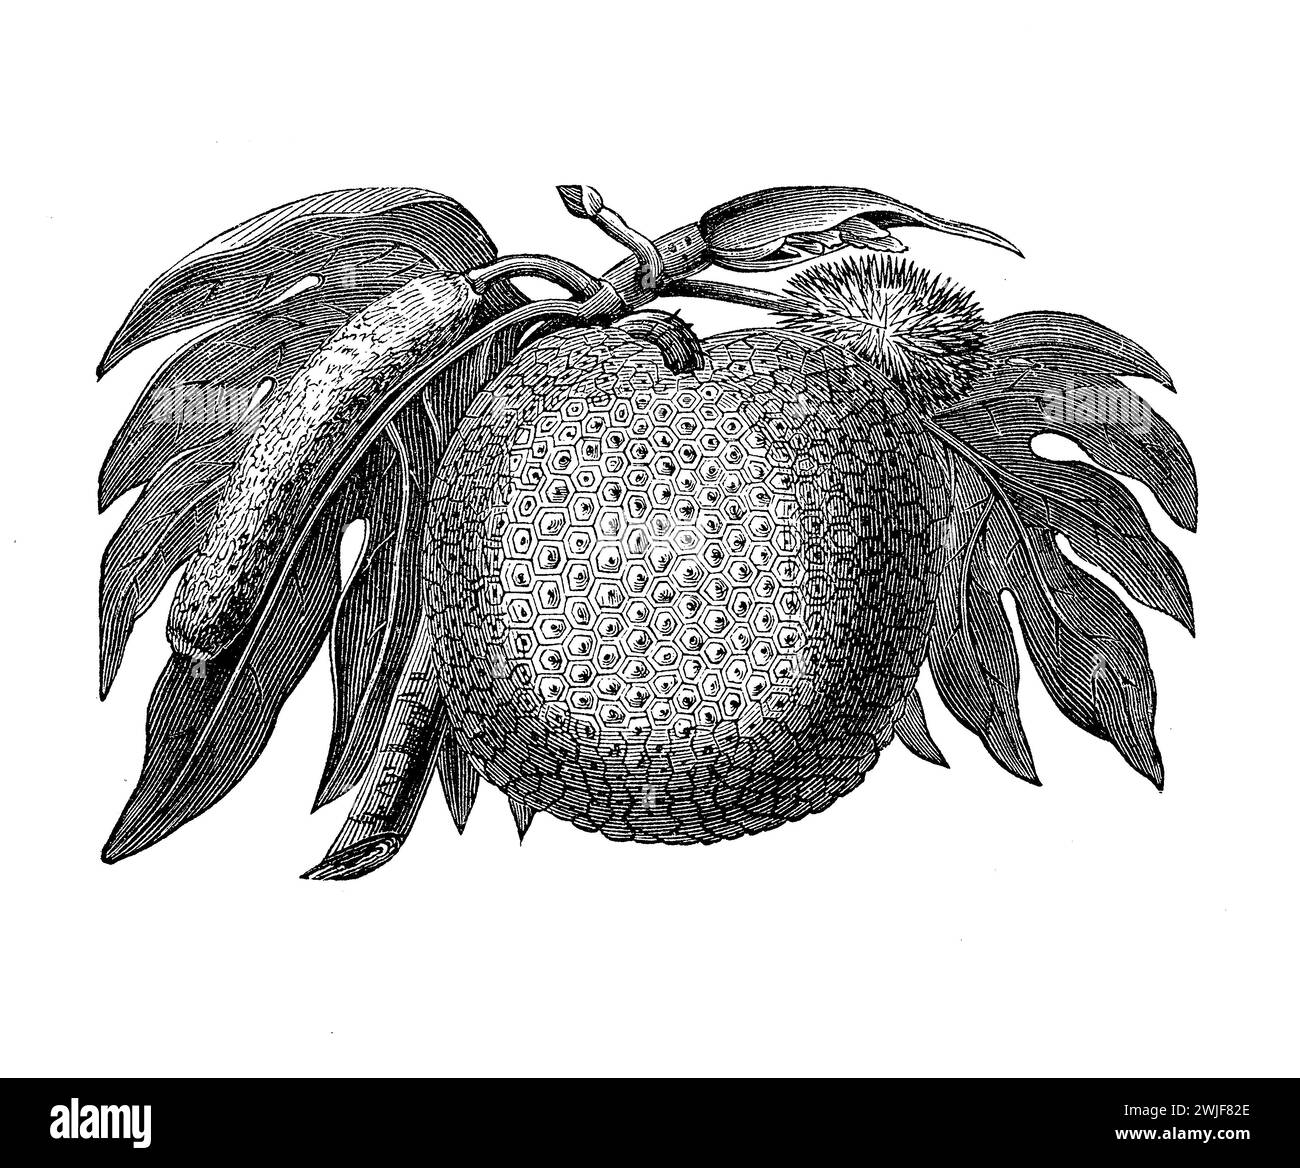 Ripe fruit of Breadfruit (Artocarpus altilis)  tree of the tropical regions similar to freshly baked bread when cooked, 19th century illustration Stock Photo